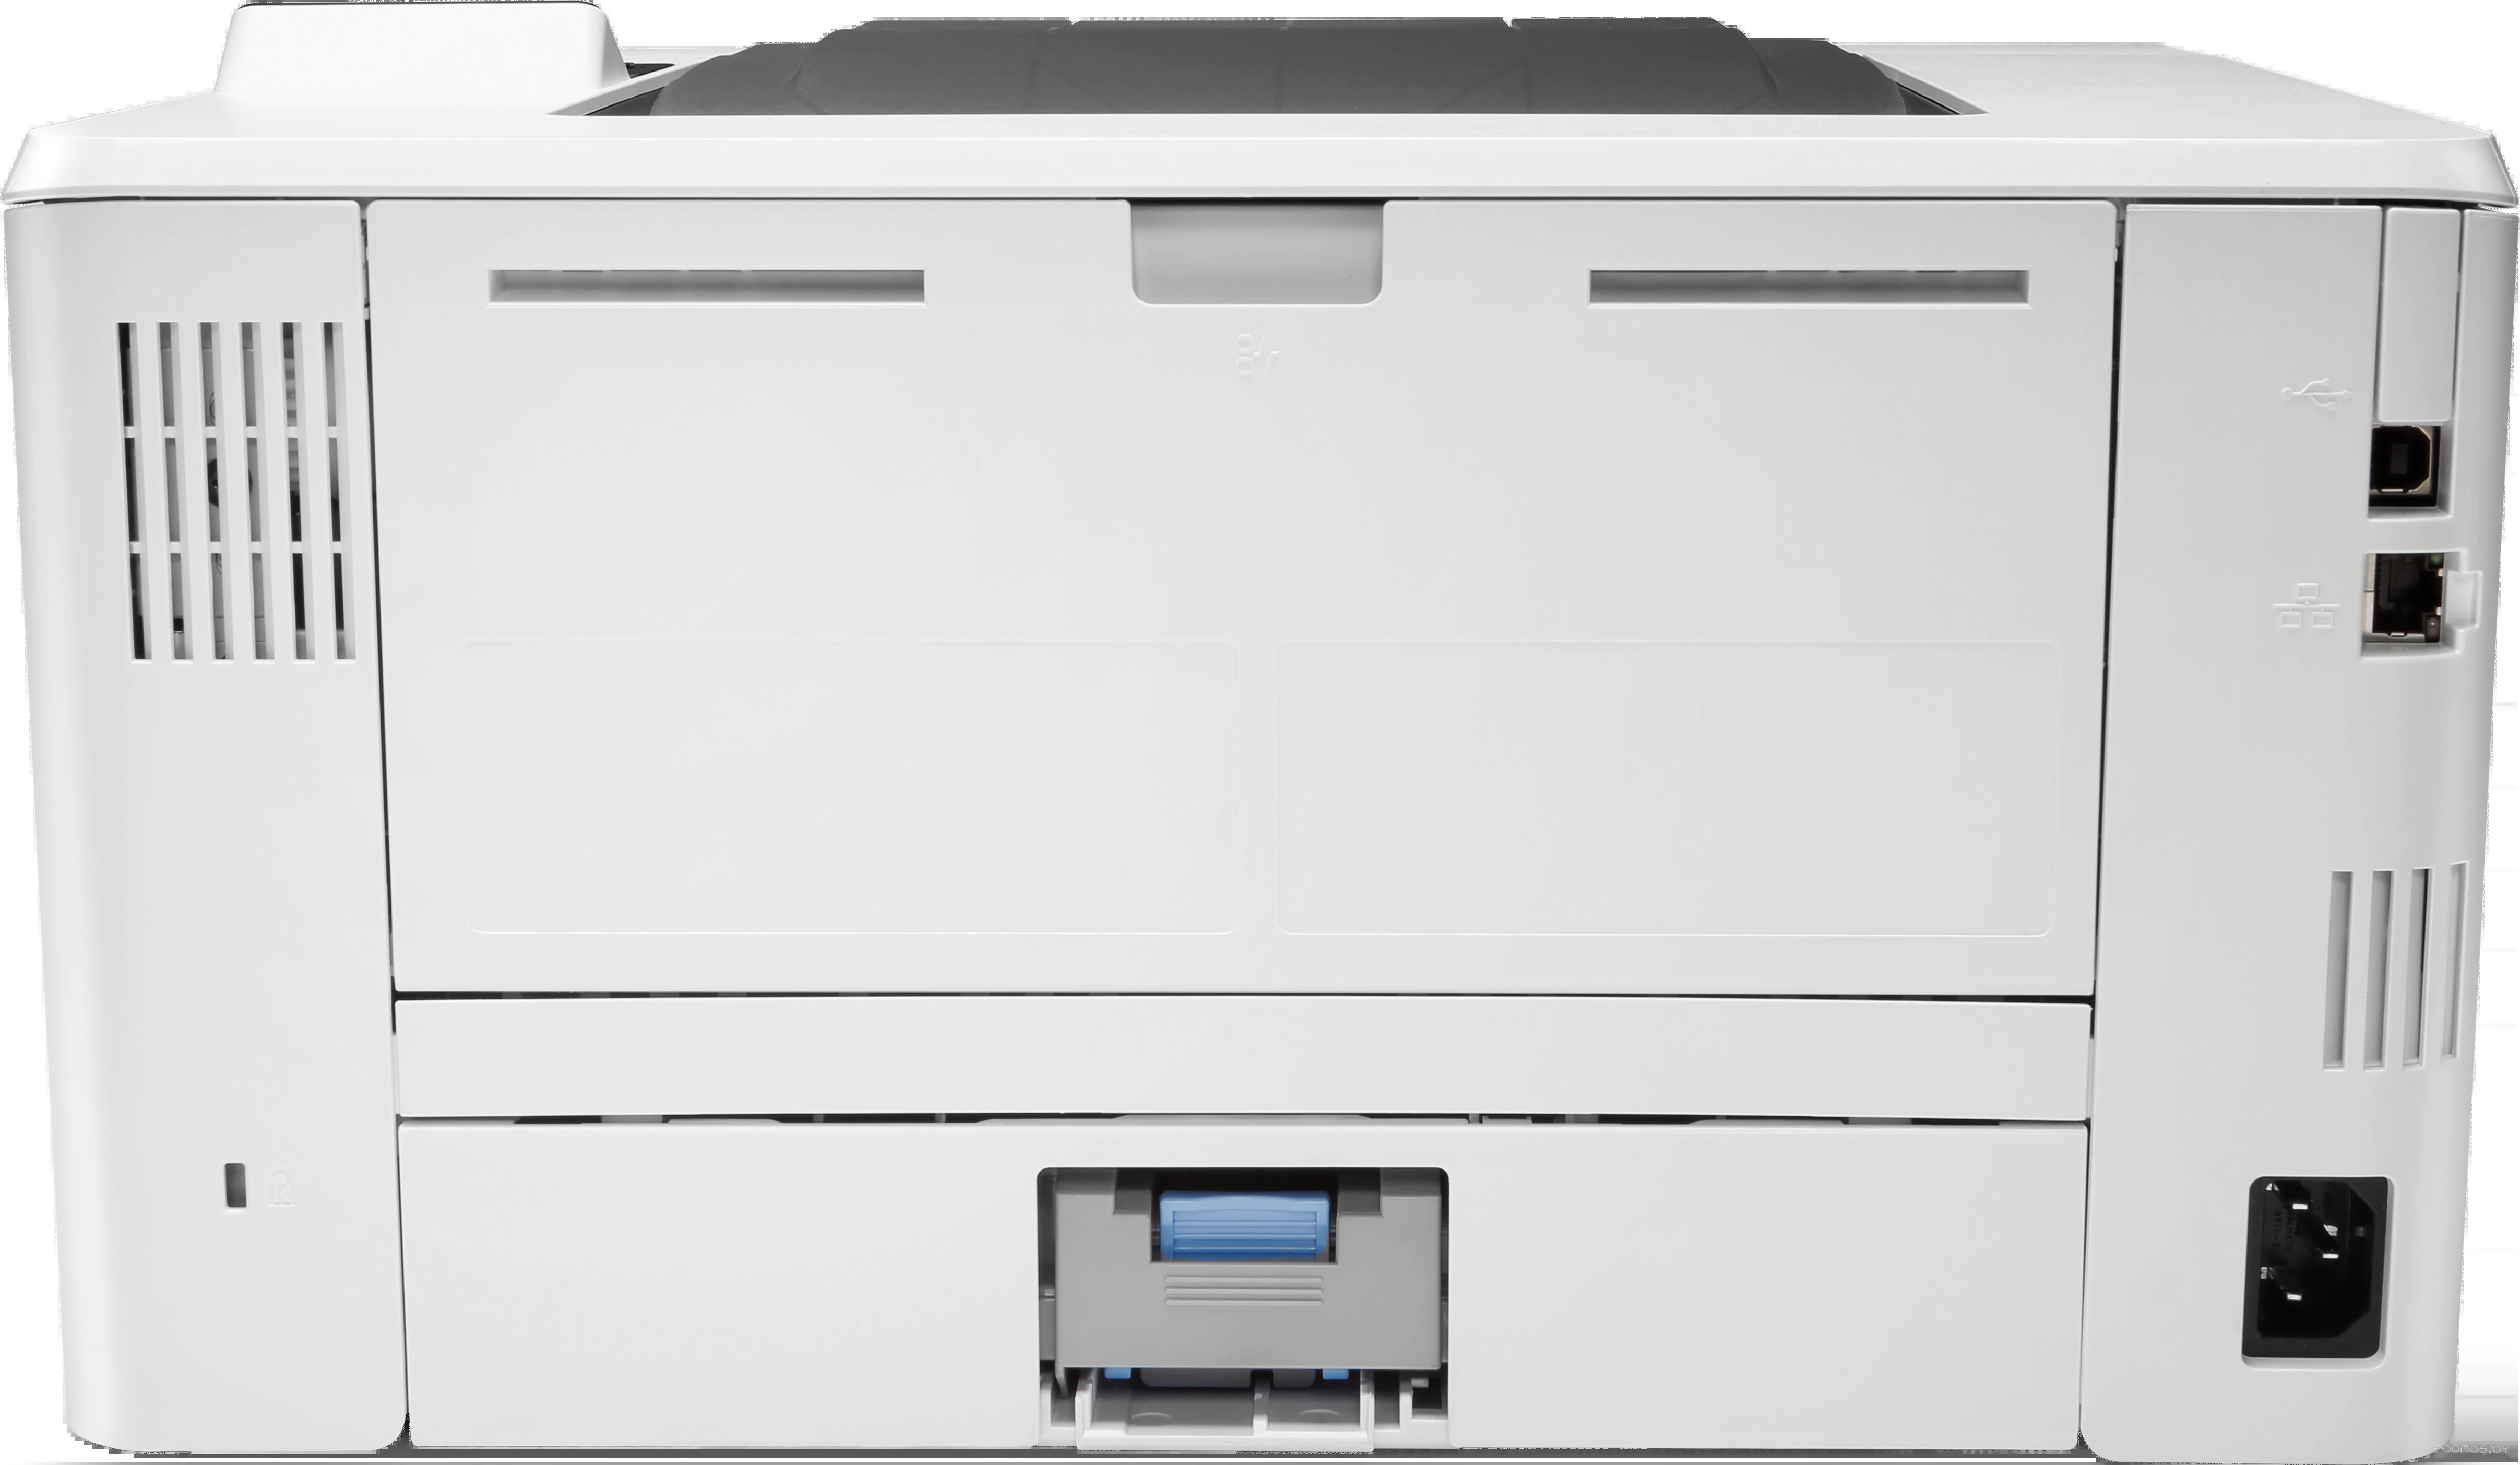  HP LaserJet Pro M404dw     